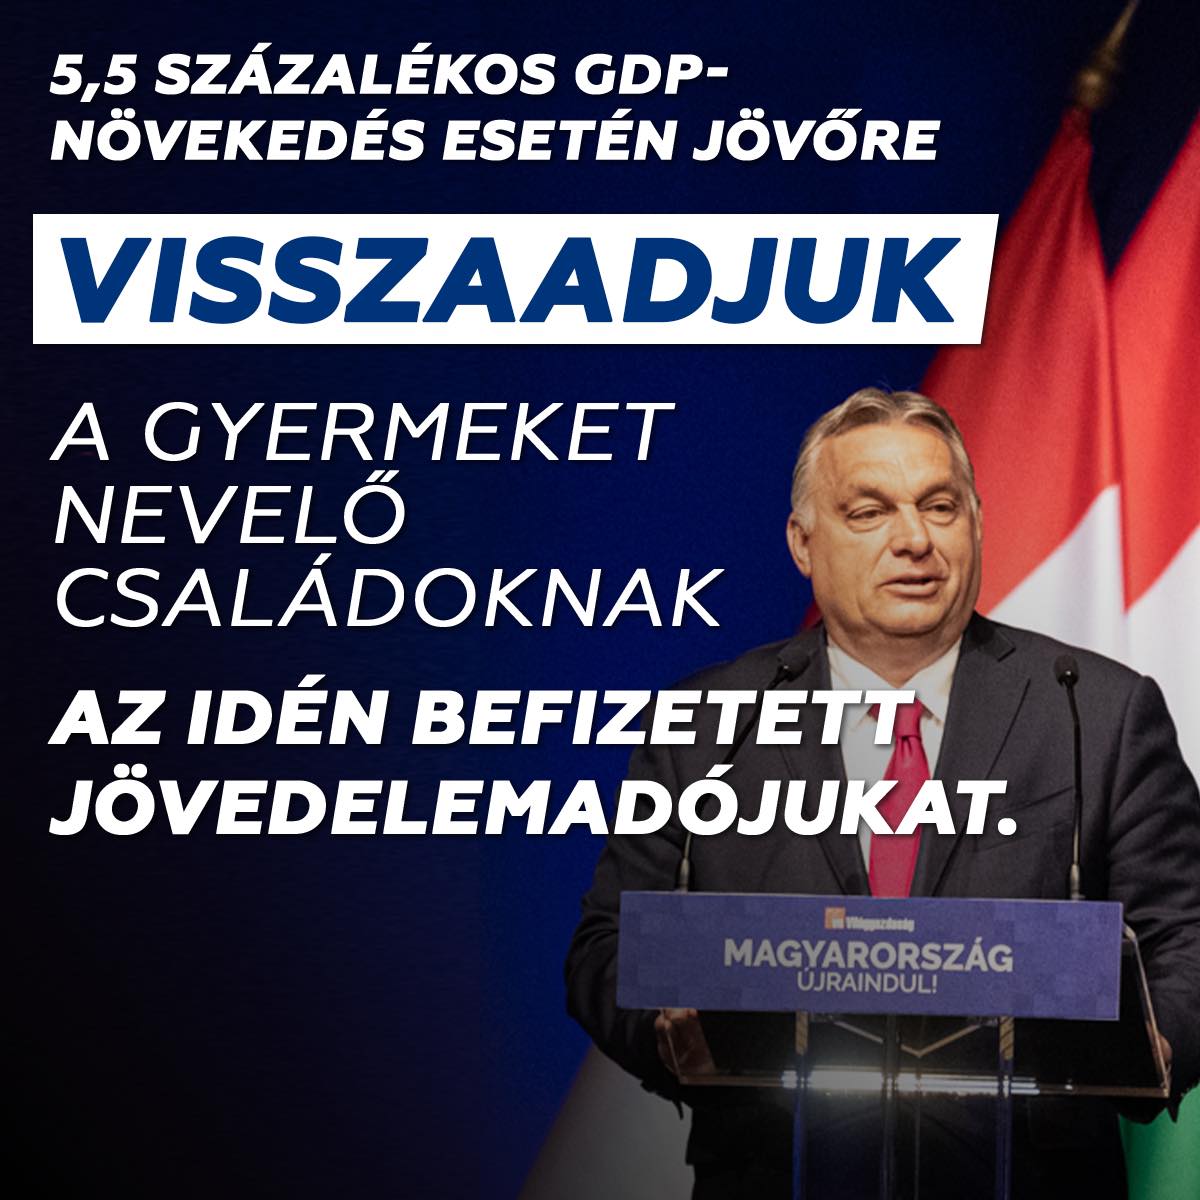 Orbán Viktor – Magyarország újraindul! 5,5 százalékos gazdasági növekedés mellett visszaépítjük a családok tartalékait.